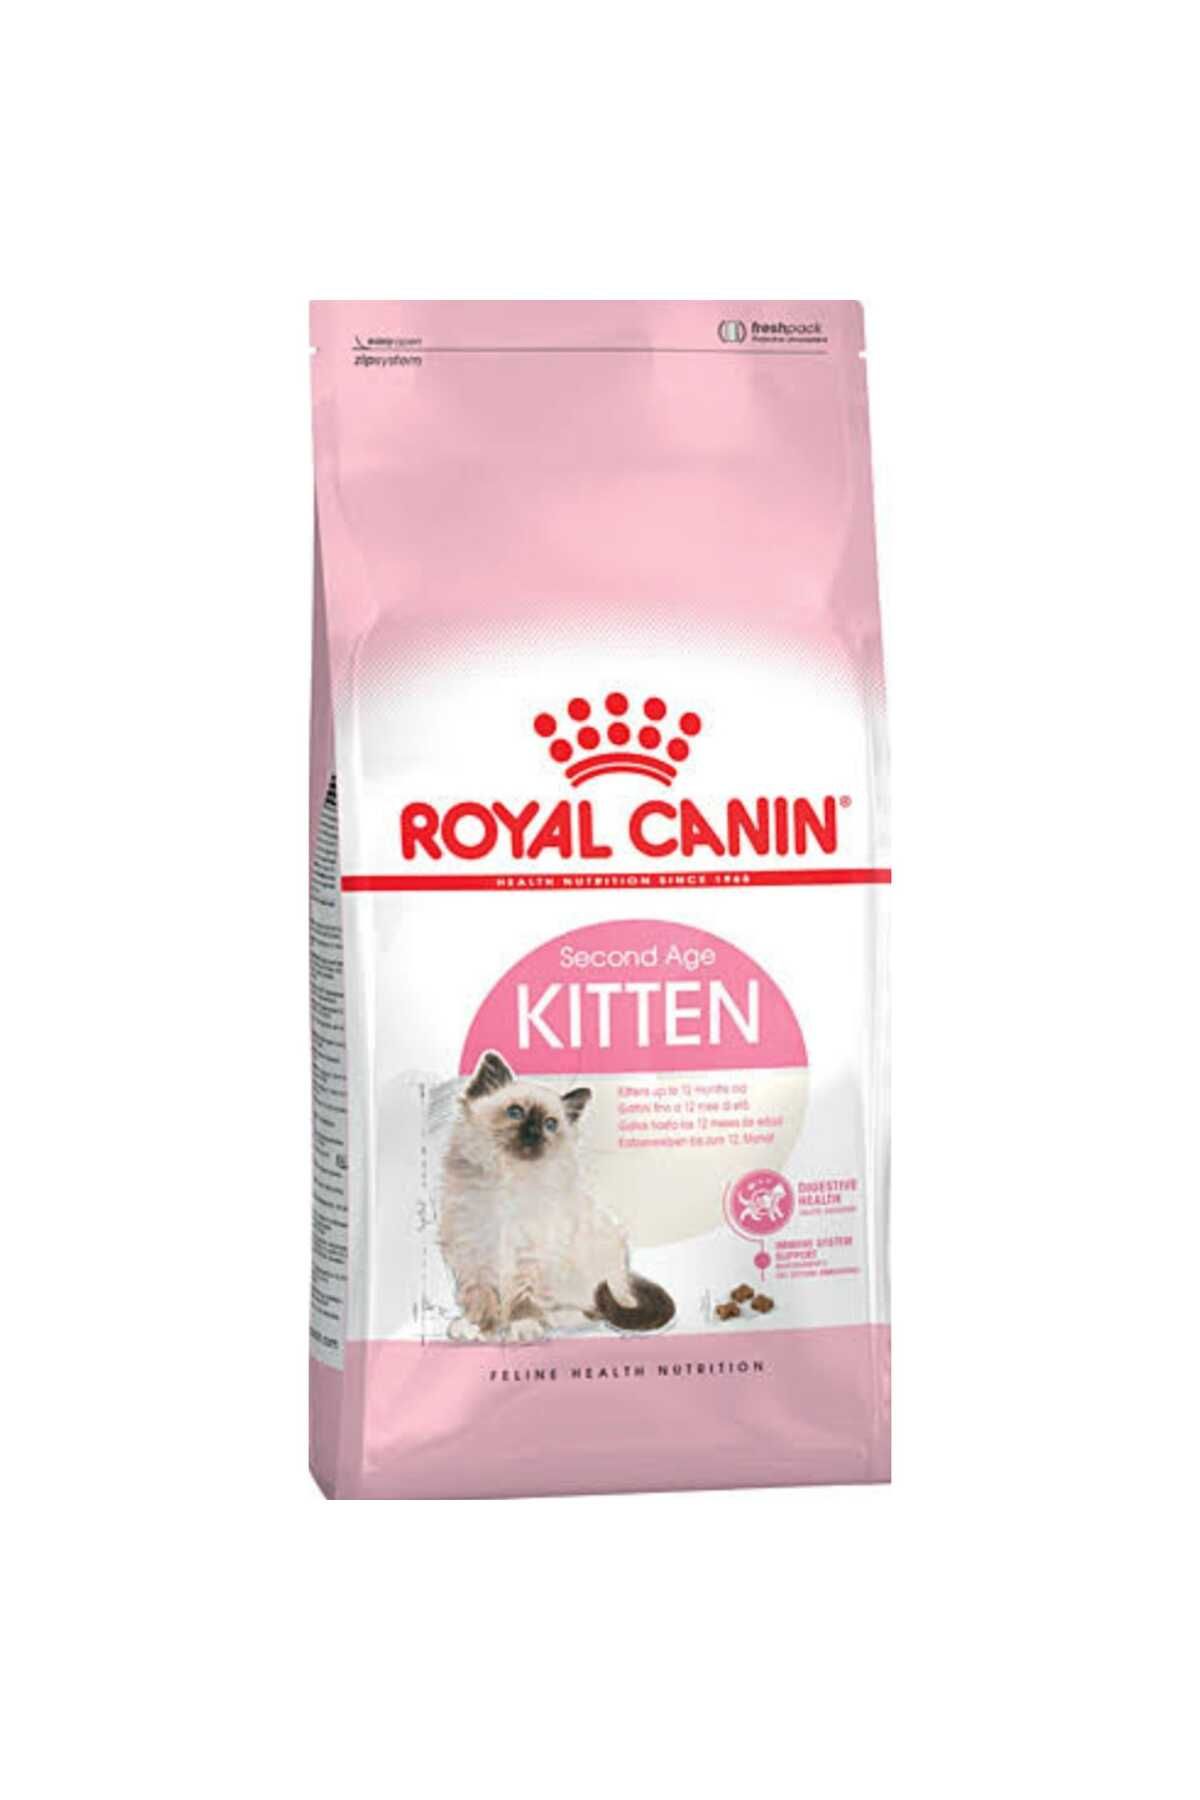 Royal Canin Neo Pet Market Royal CaninKitten Yavru Kedi Mamasi 10 kg